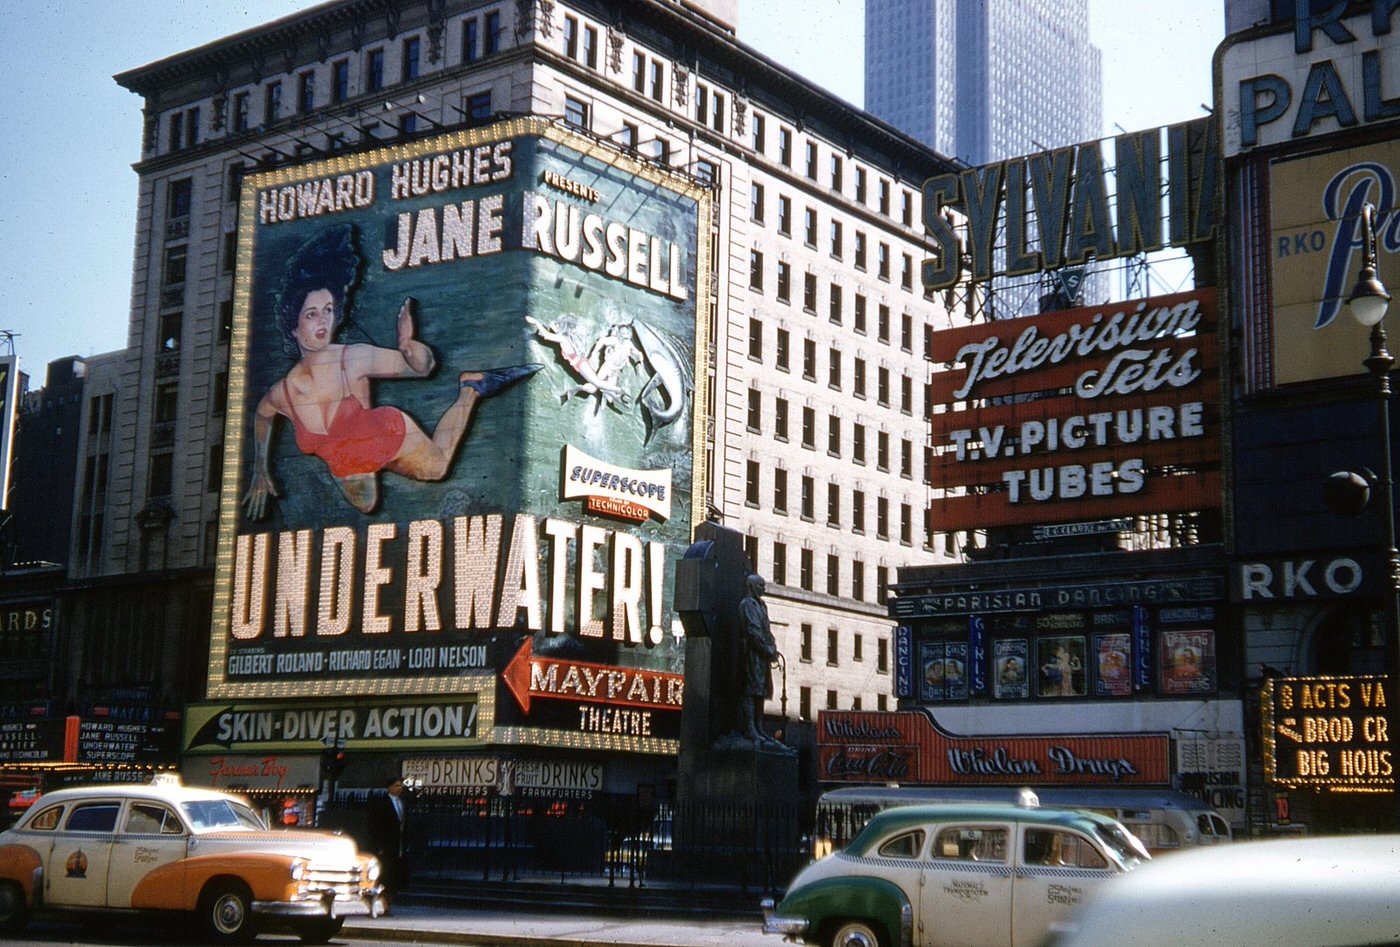 ane Russell in Underwater presented by Howard Hughes M, 1955